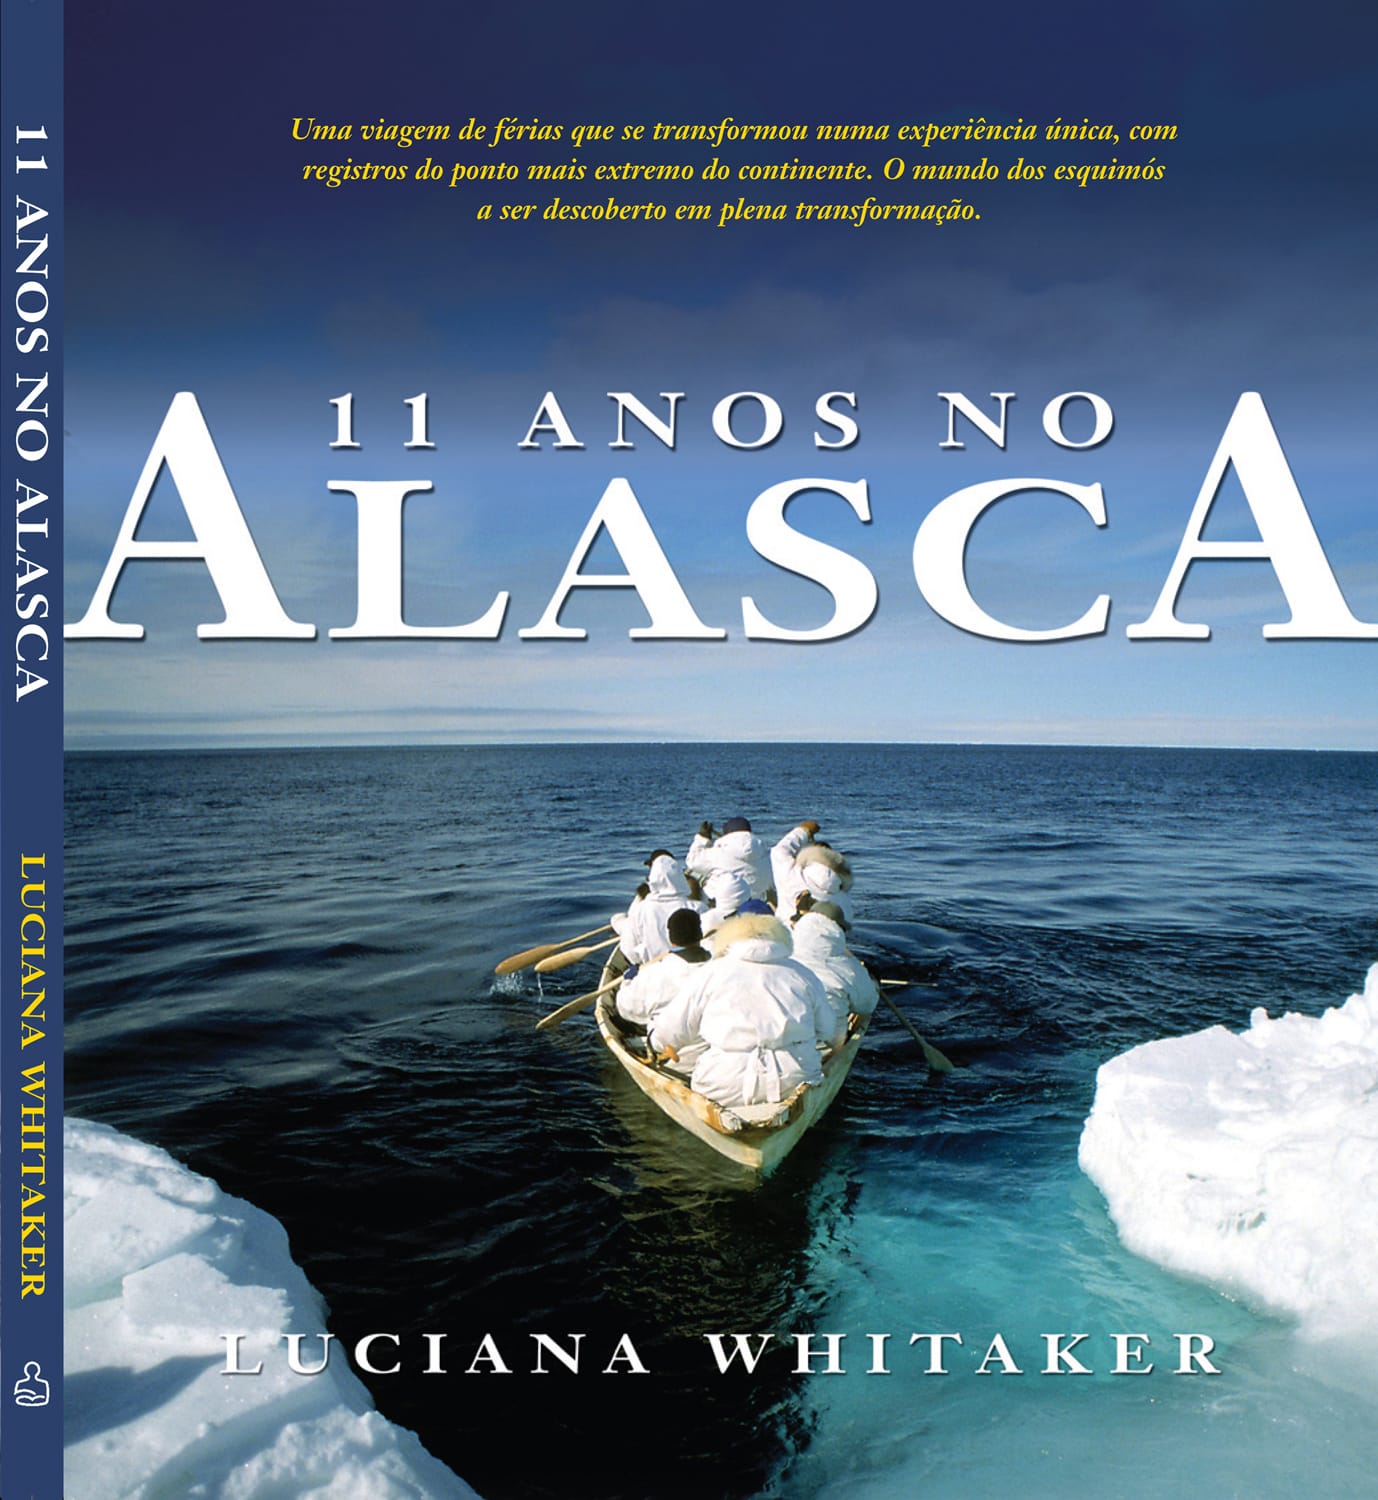 11 Anos no Alasca, Ediouro, Brasil 2008